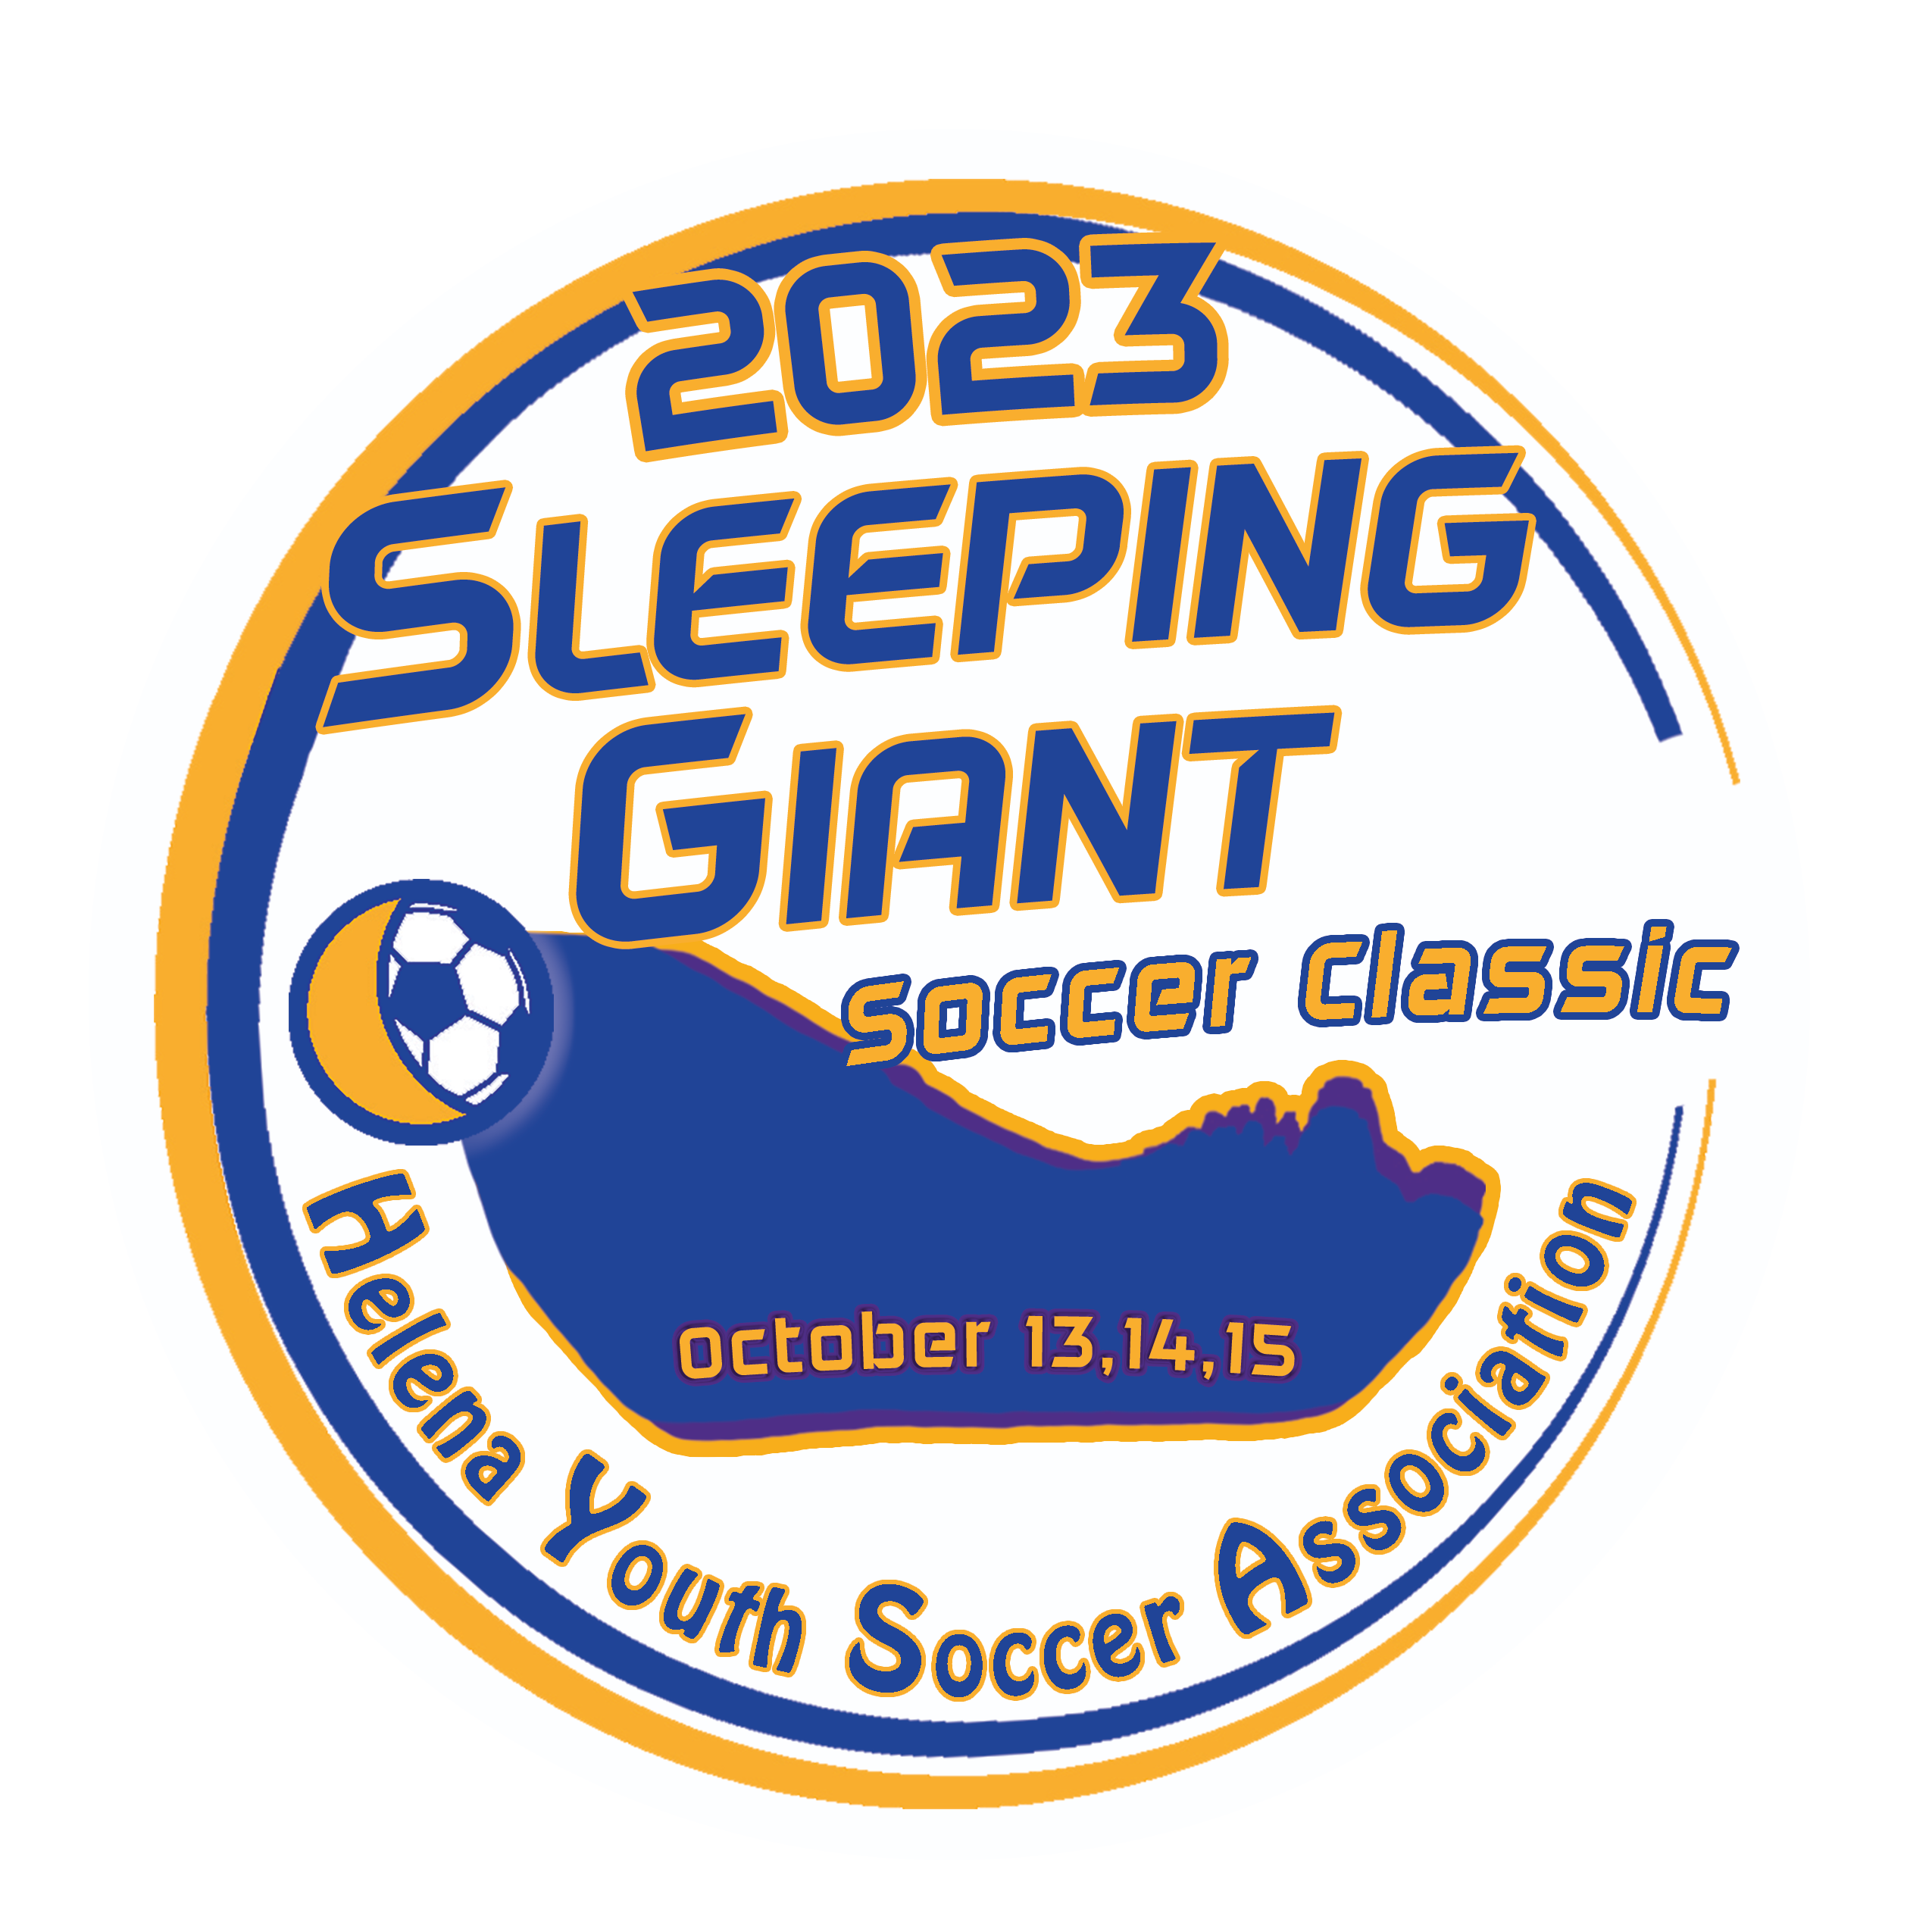 2023 Sleeping Giant Logo header